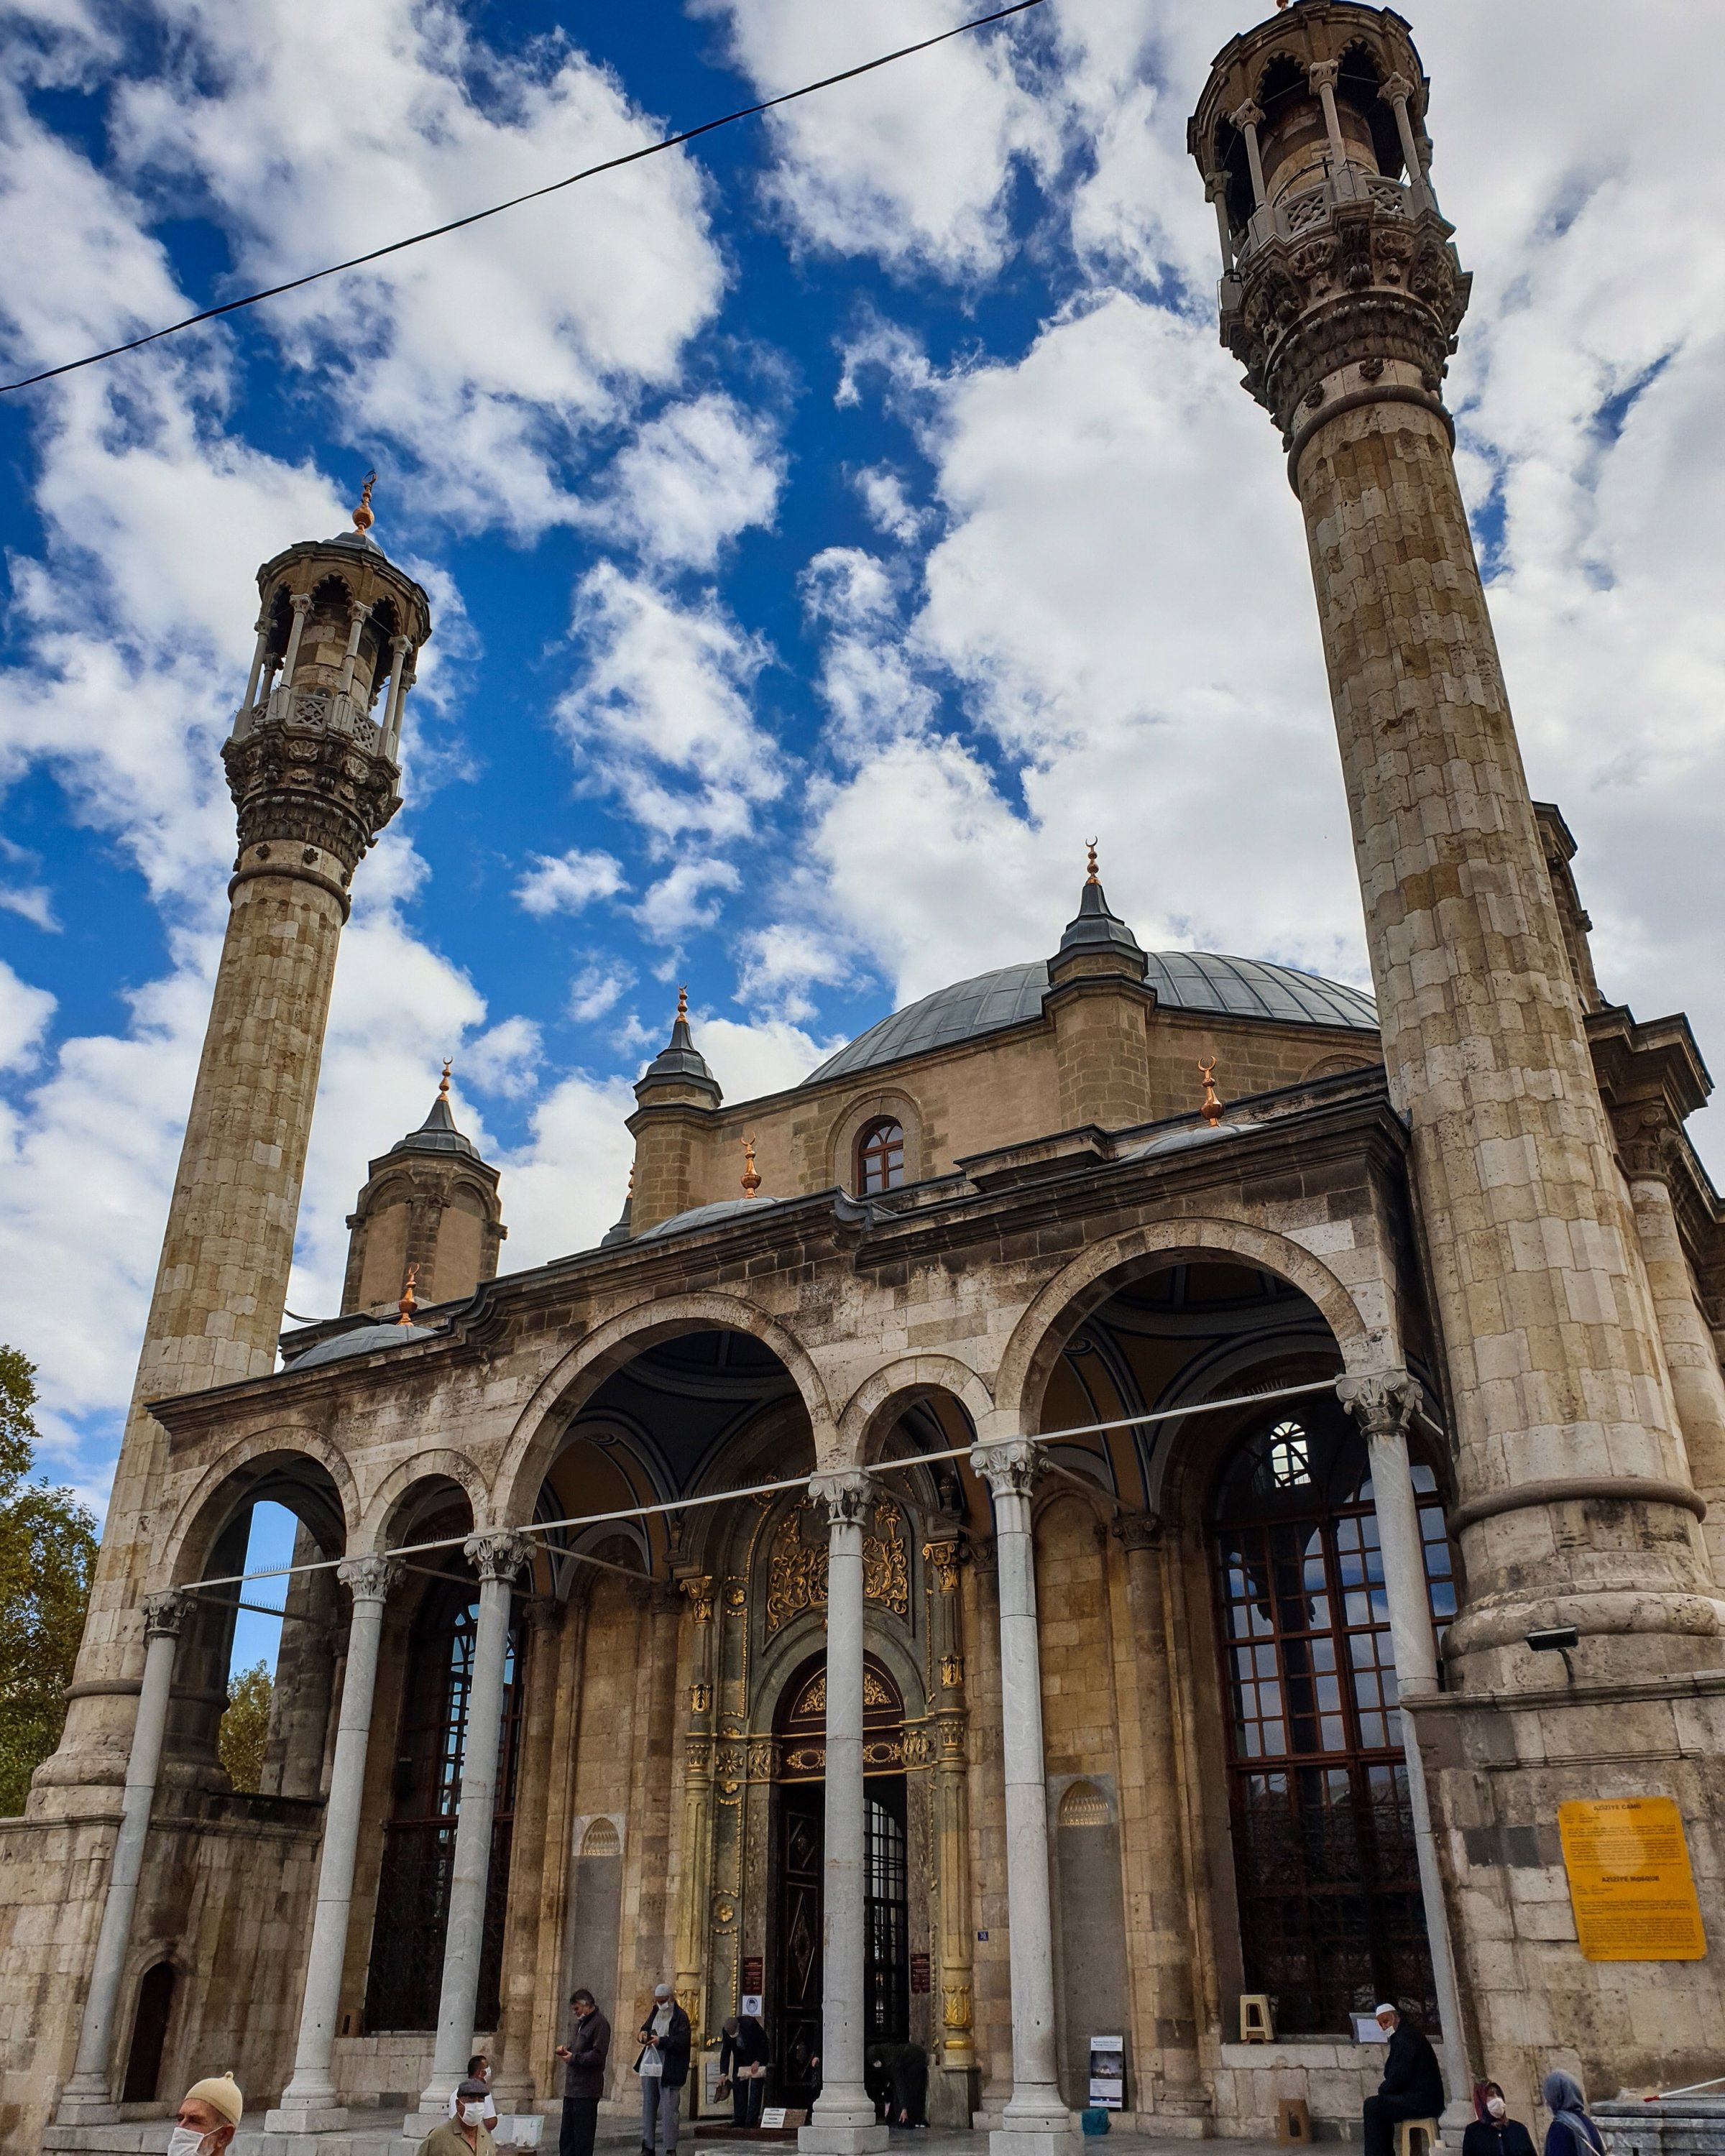 The exterior of Aziziye Mosque. (Photo by Argun Konuk)